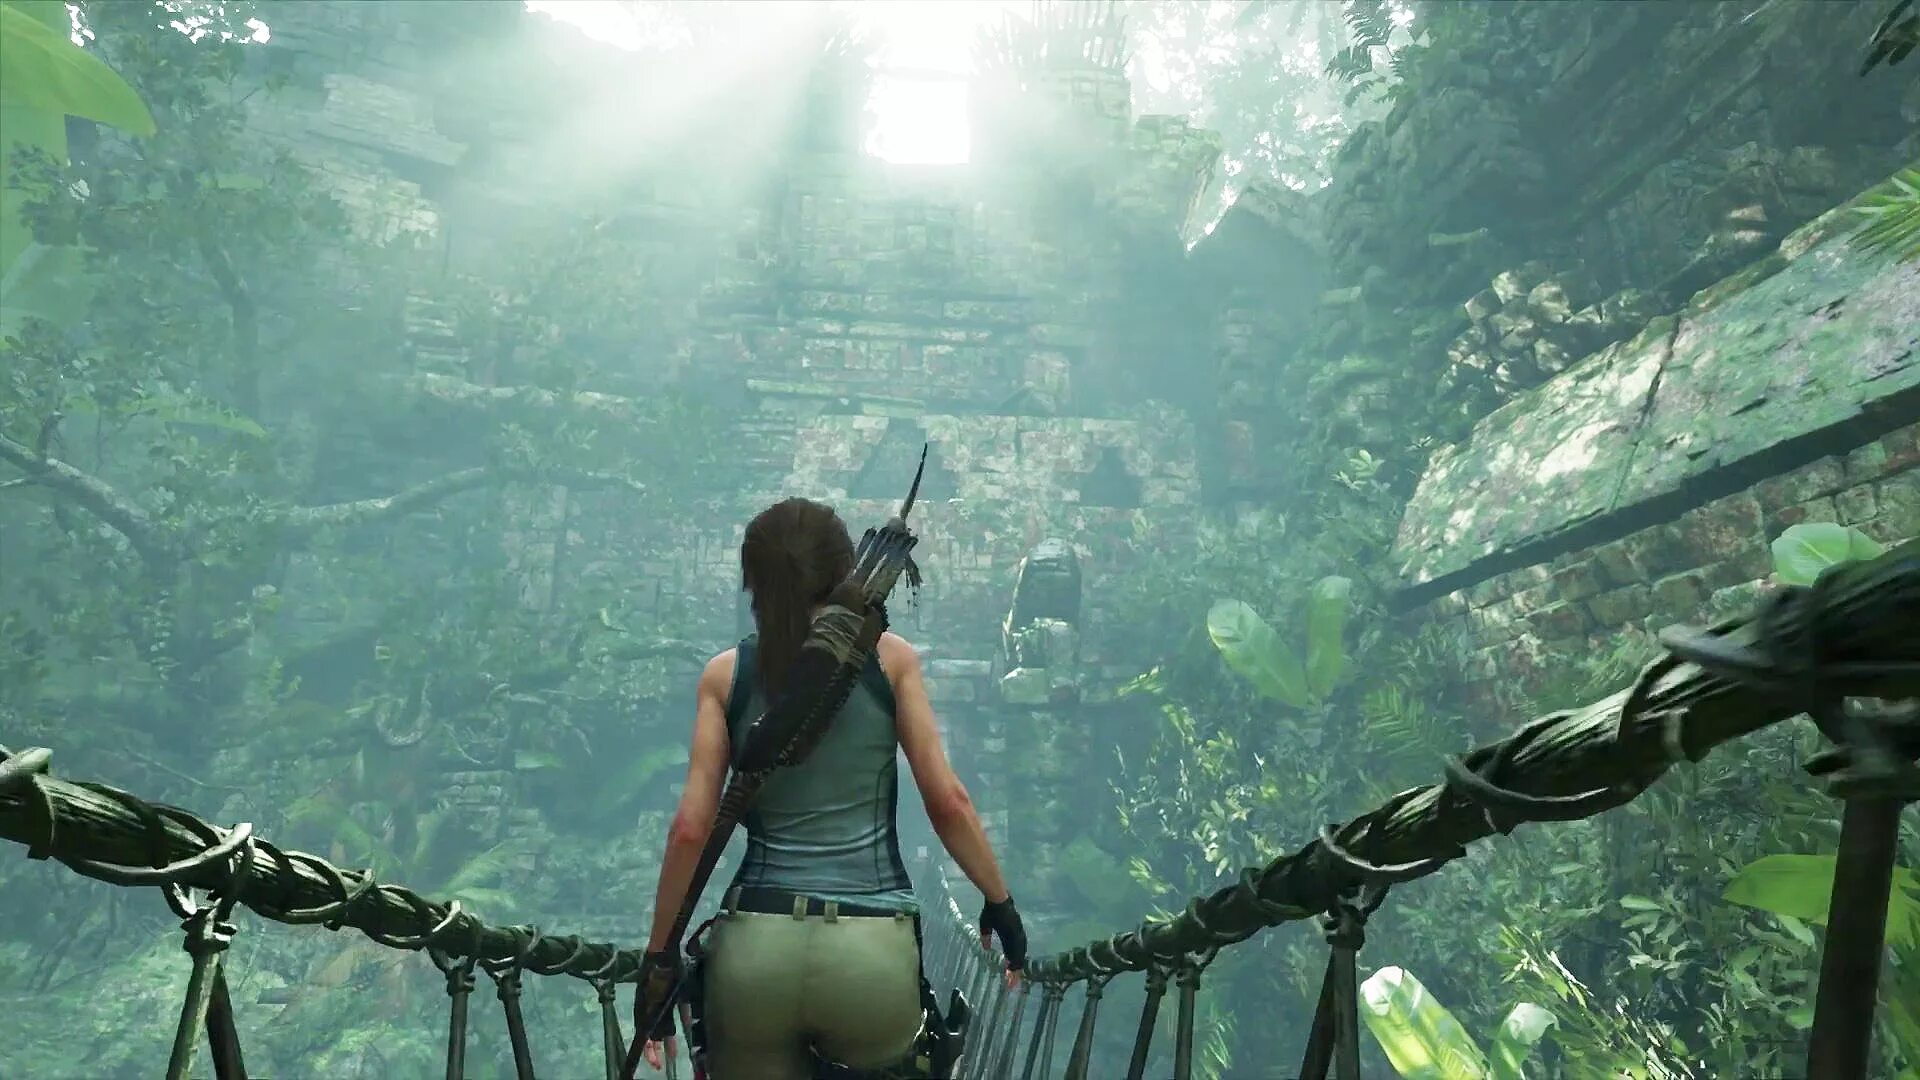 Lara croft island. Shadow of the Tomb Raider. Том рейдер гробницы 2016.